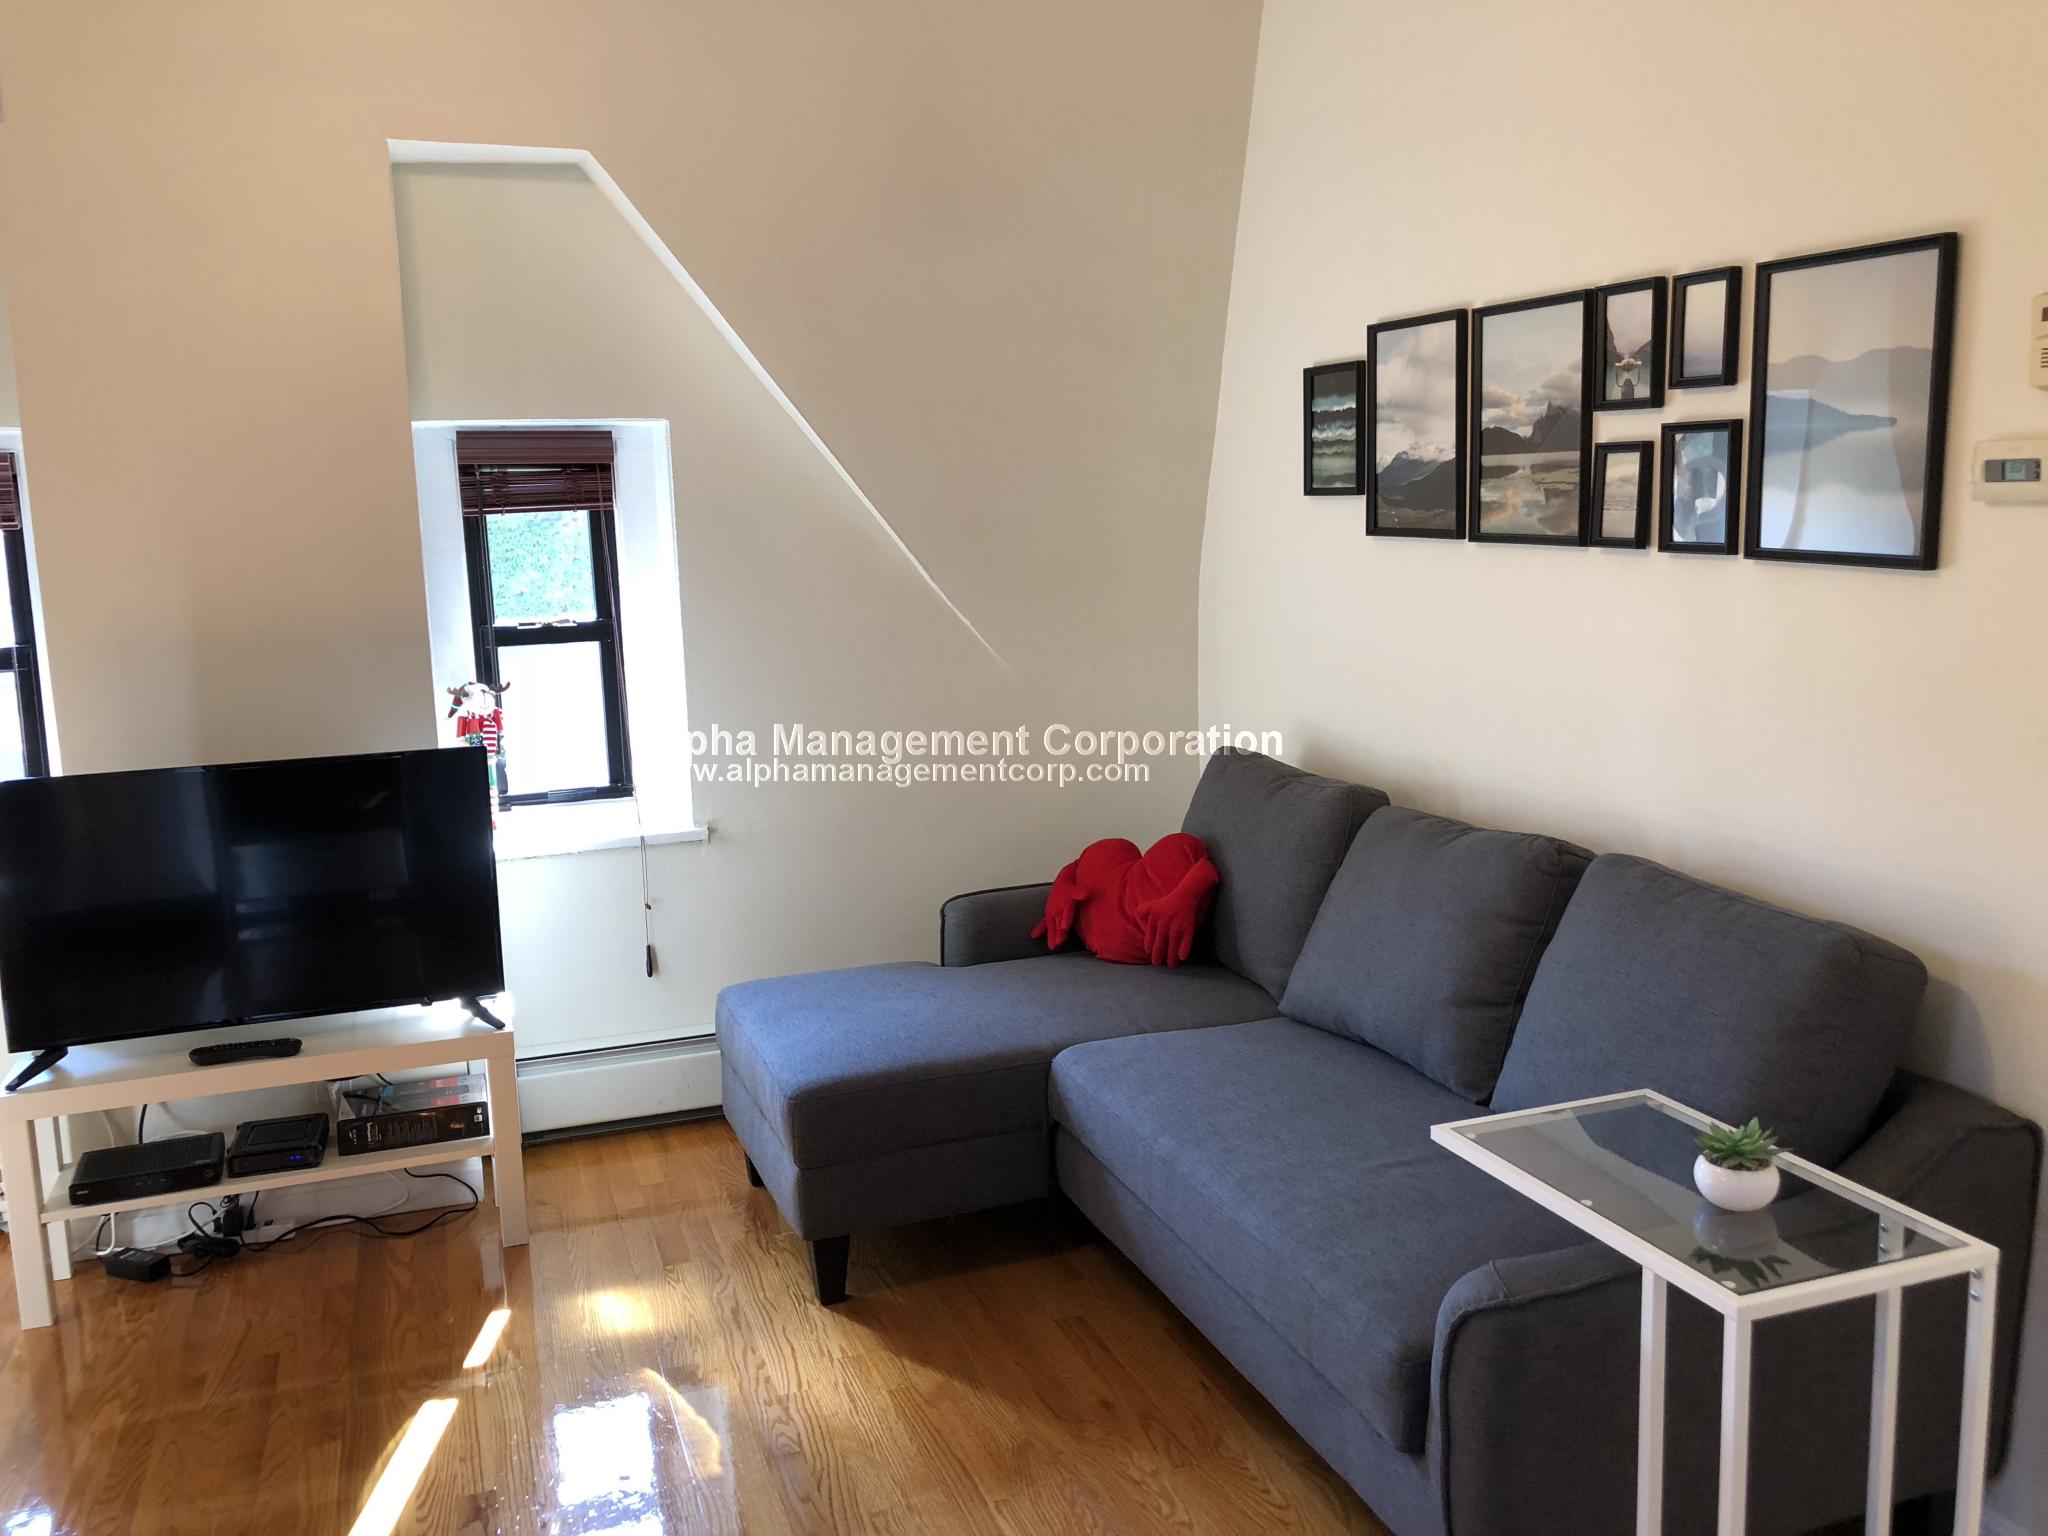 Photos of apartment on Cumberland St.,Boston MA 02115